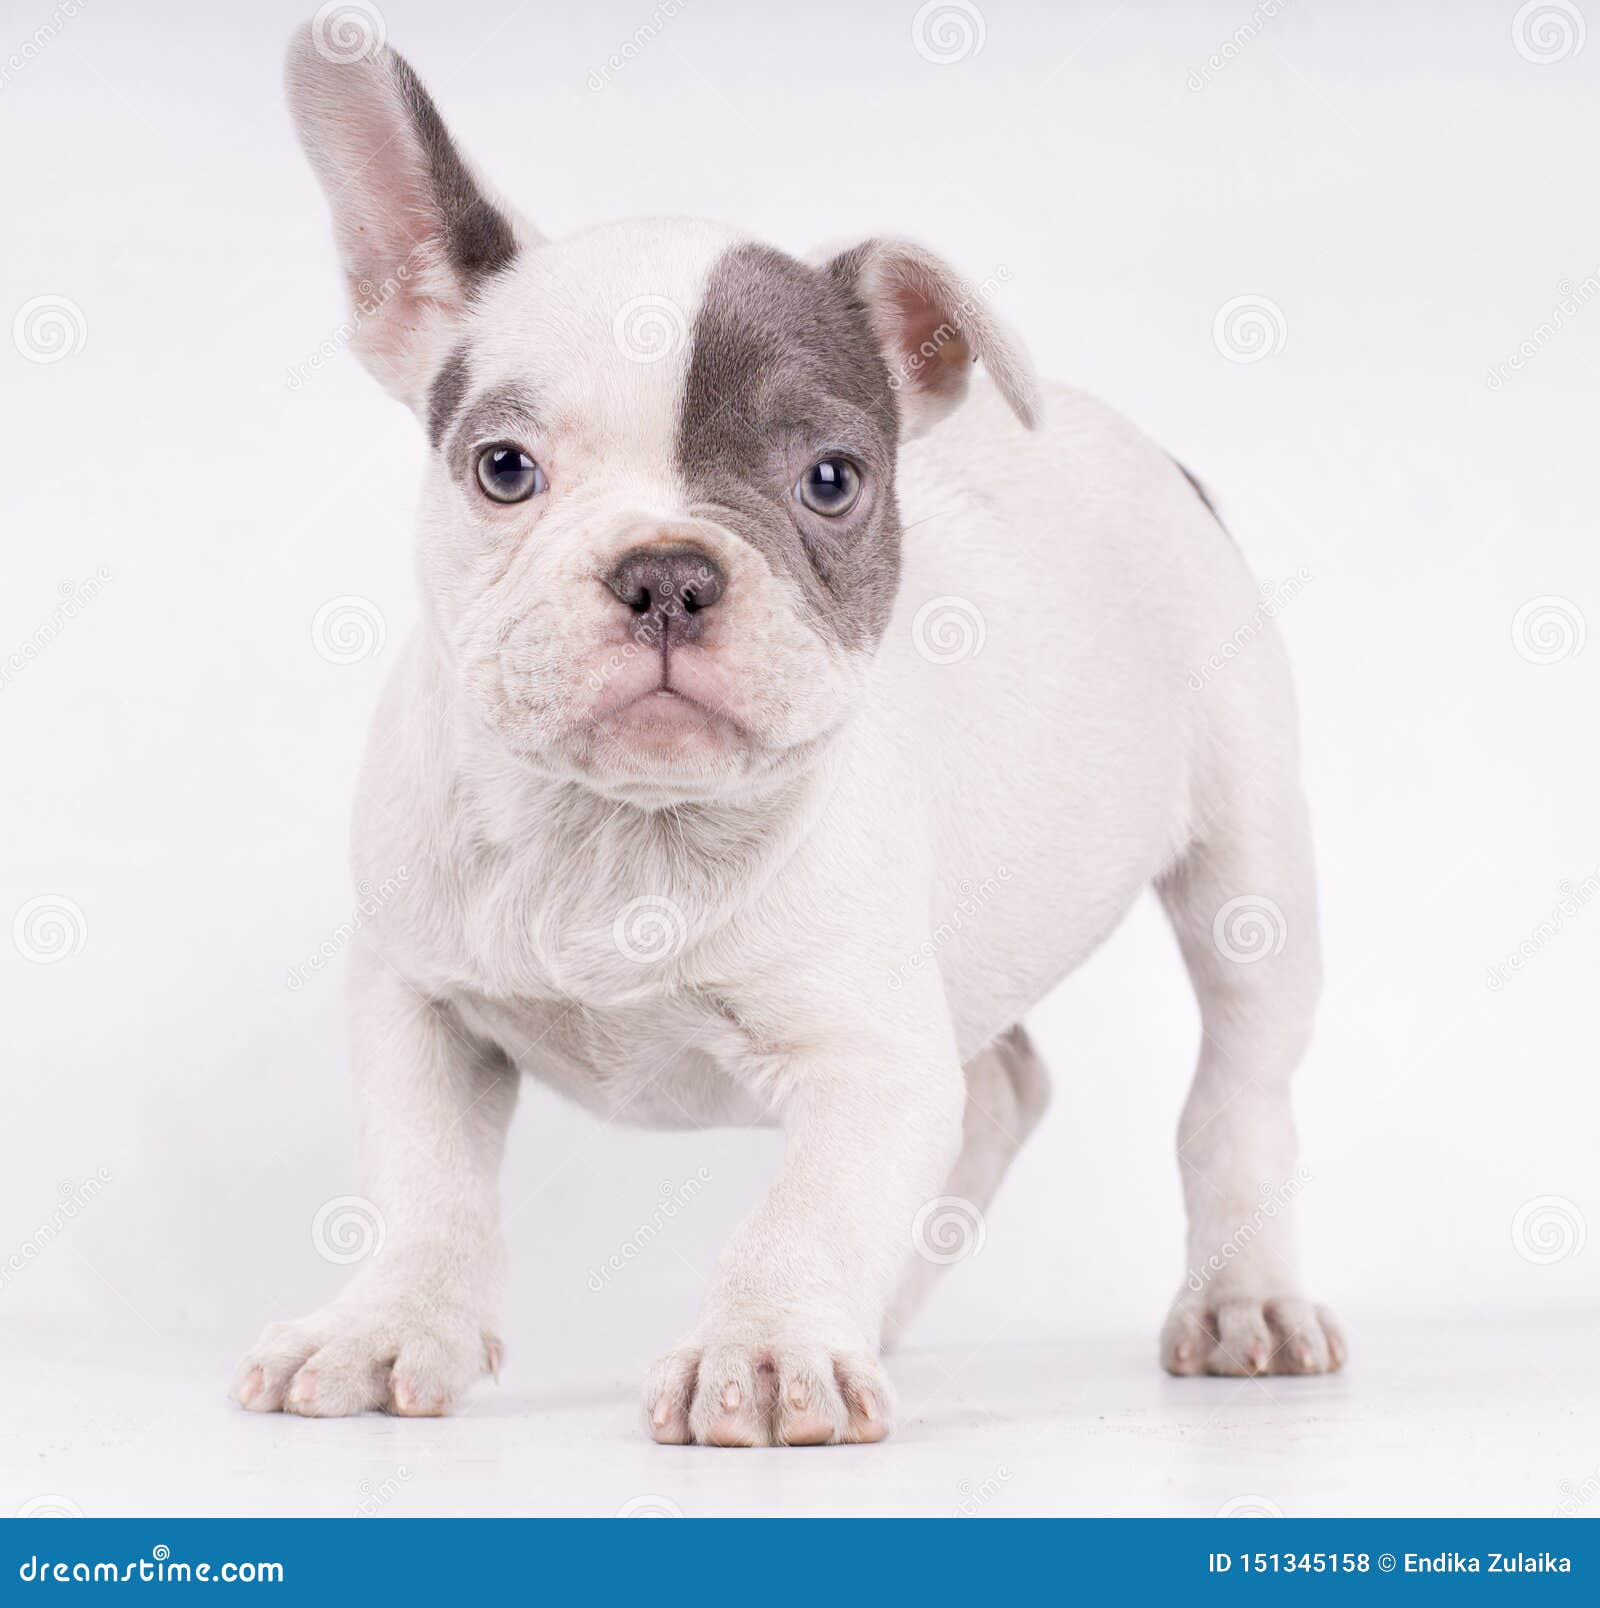 french bulldog white with blue eyes